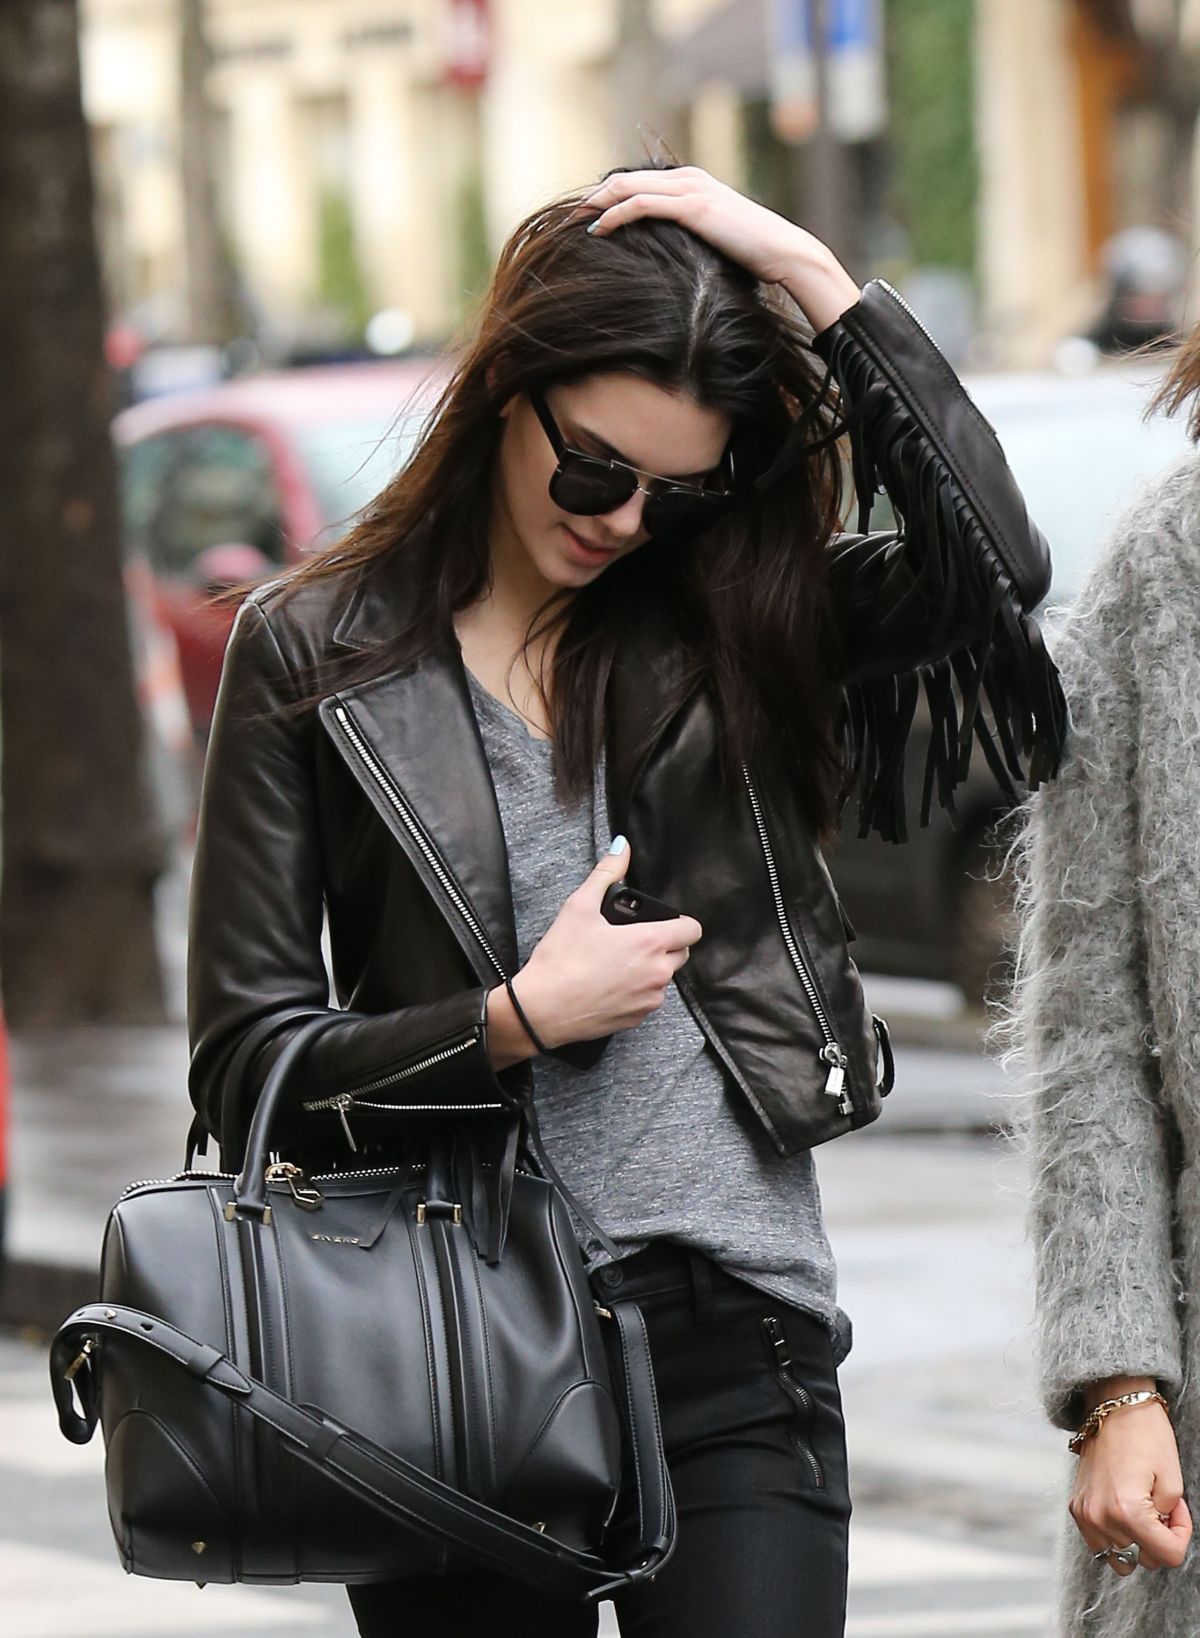 L'Oréal Paris chooses Kendall Jenner as brand ambassador